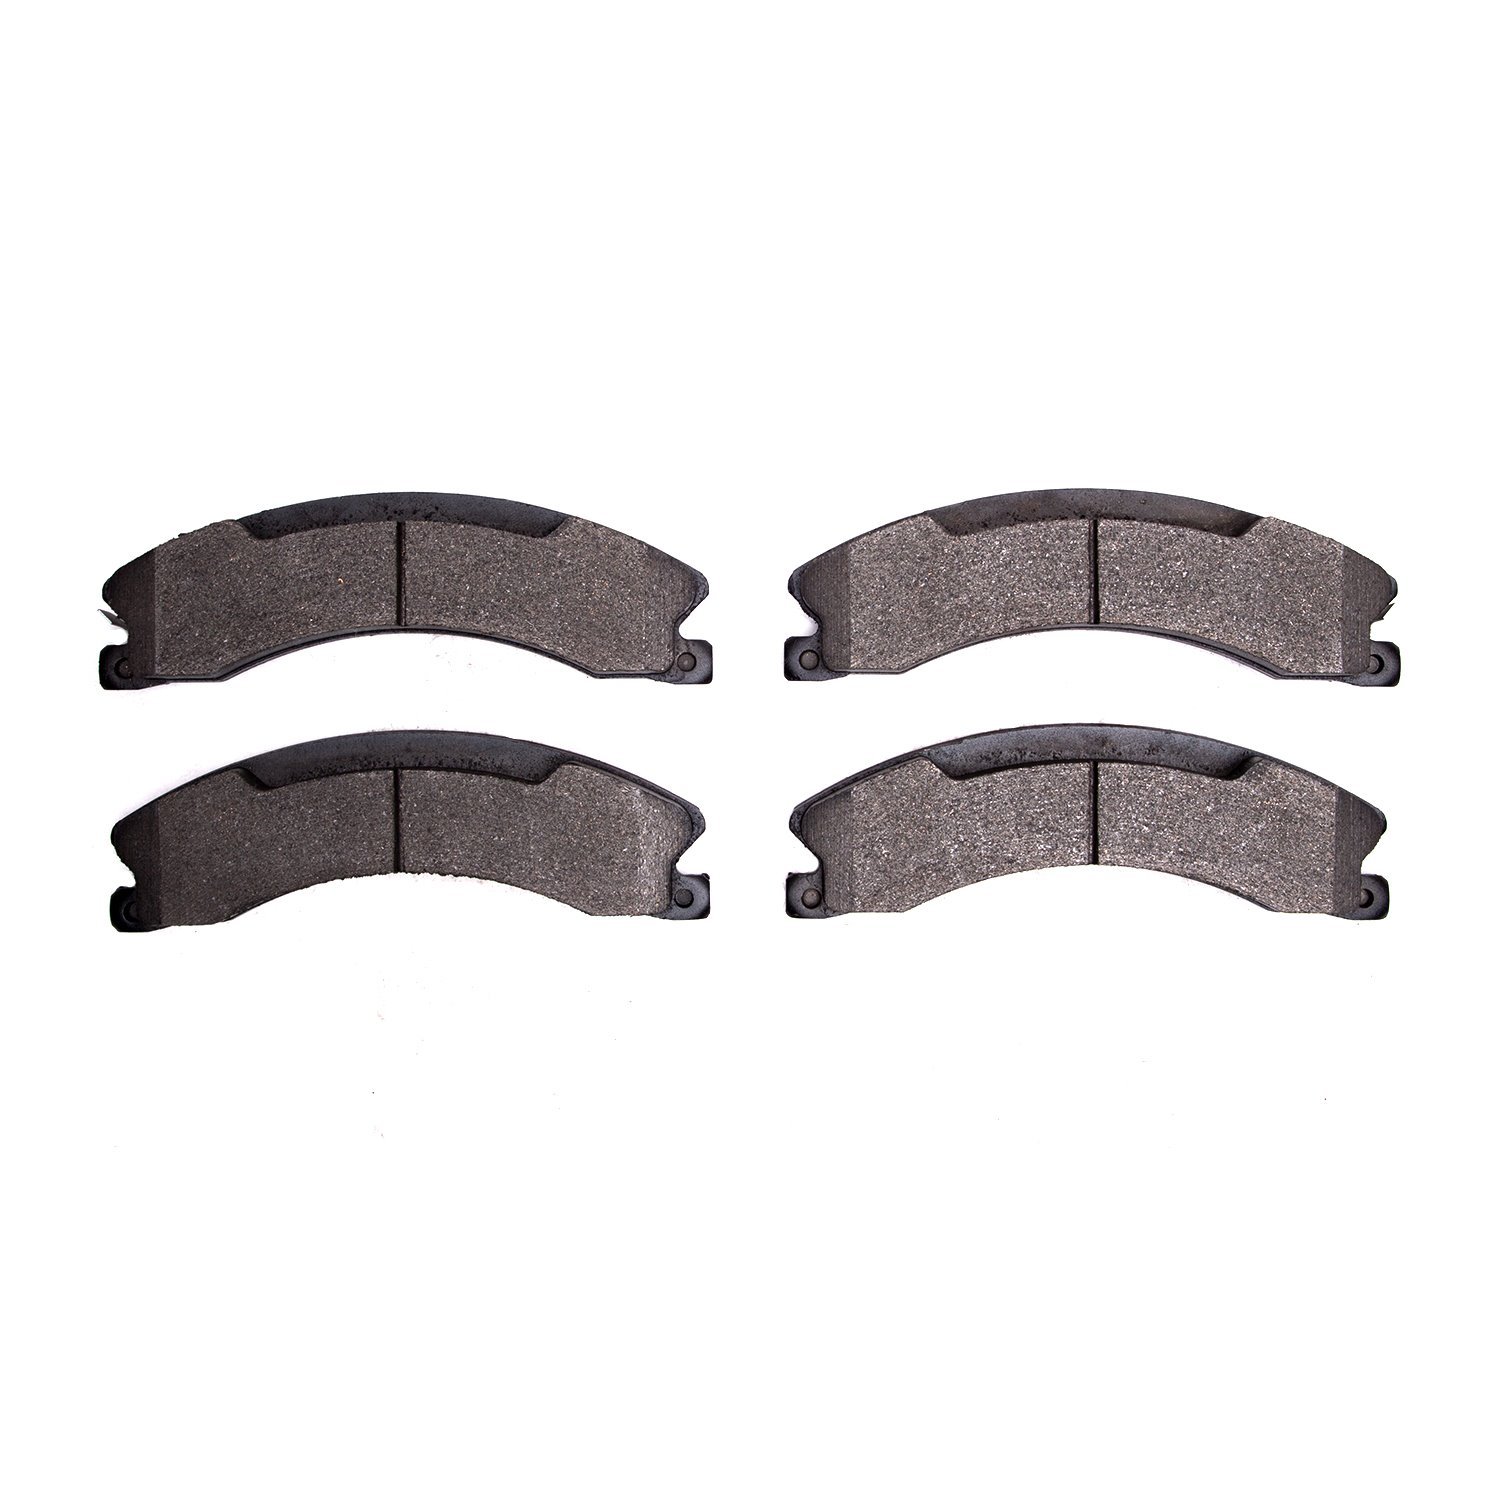 Ceramic Brake Pads, Fits Select Multiple Makes/Models, Position: Rear & Front